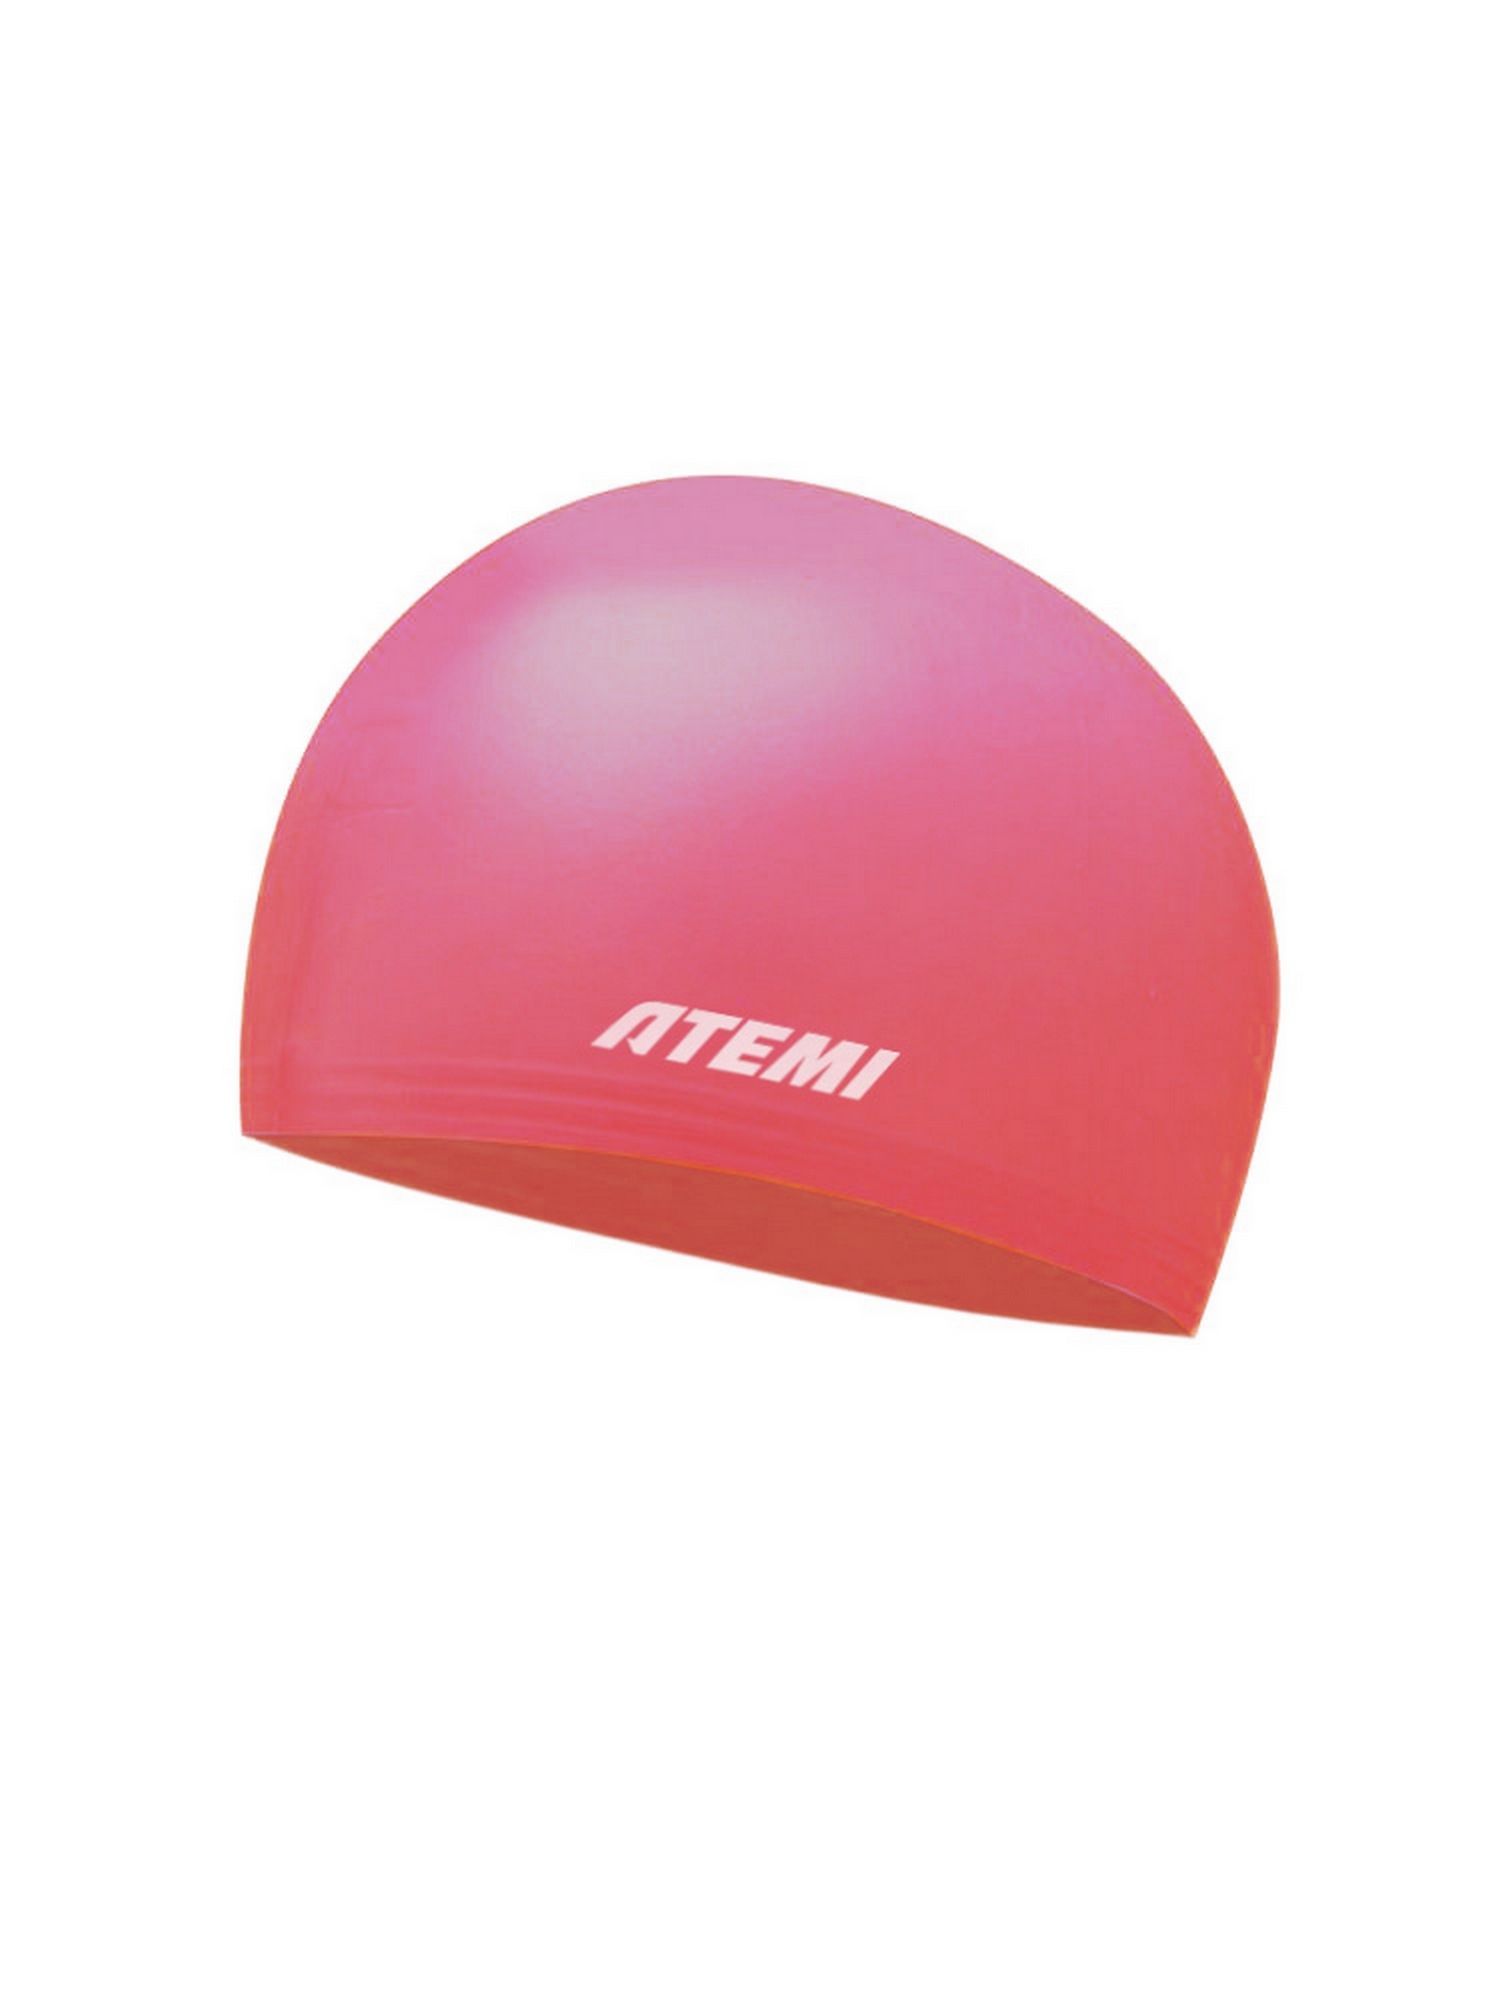 Шапочка для плавания Atemi kids light silicone cap Bright red KLSC1R красный 1500_2000